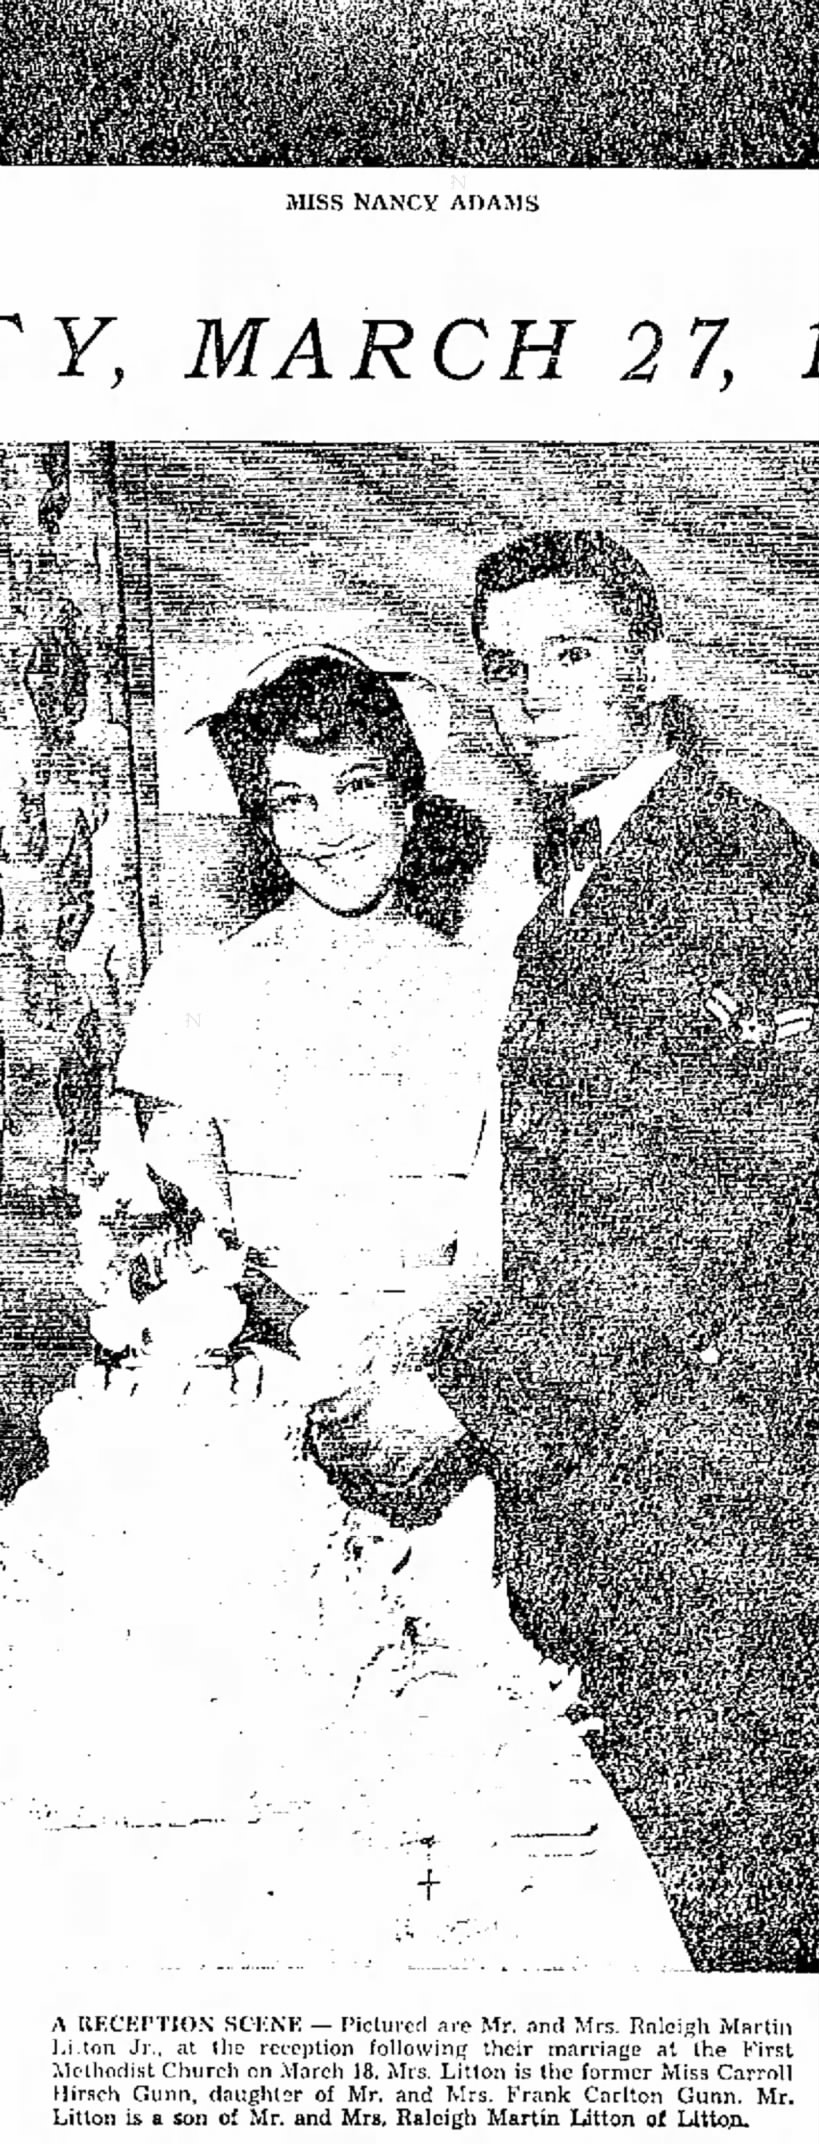 27 Mar 1960 The Delta Democrat Times Greenville, MS